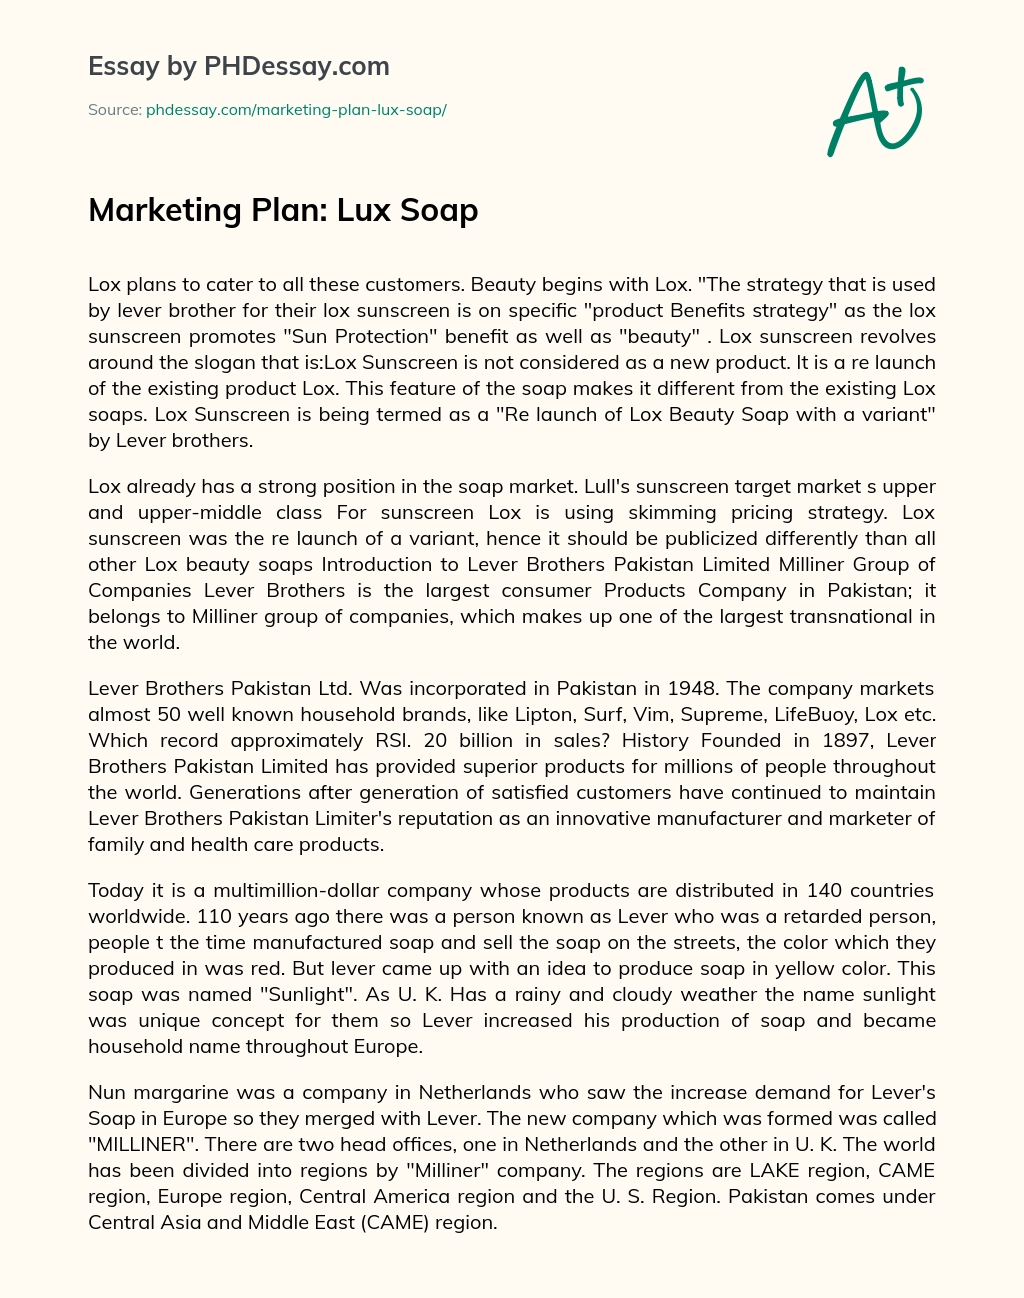 Marketing Plan: Lux Soap essay